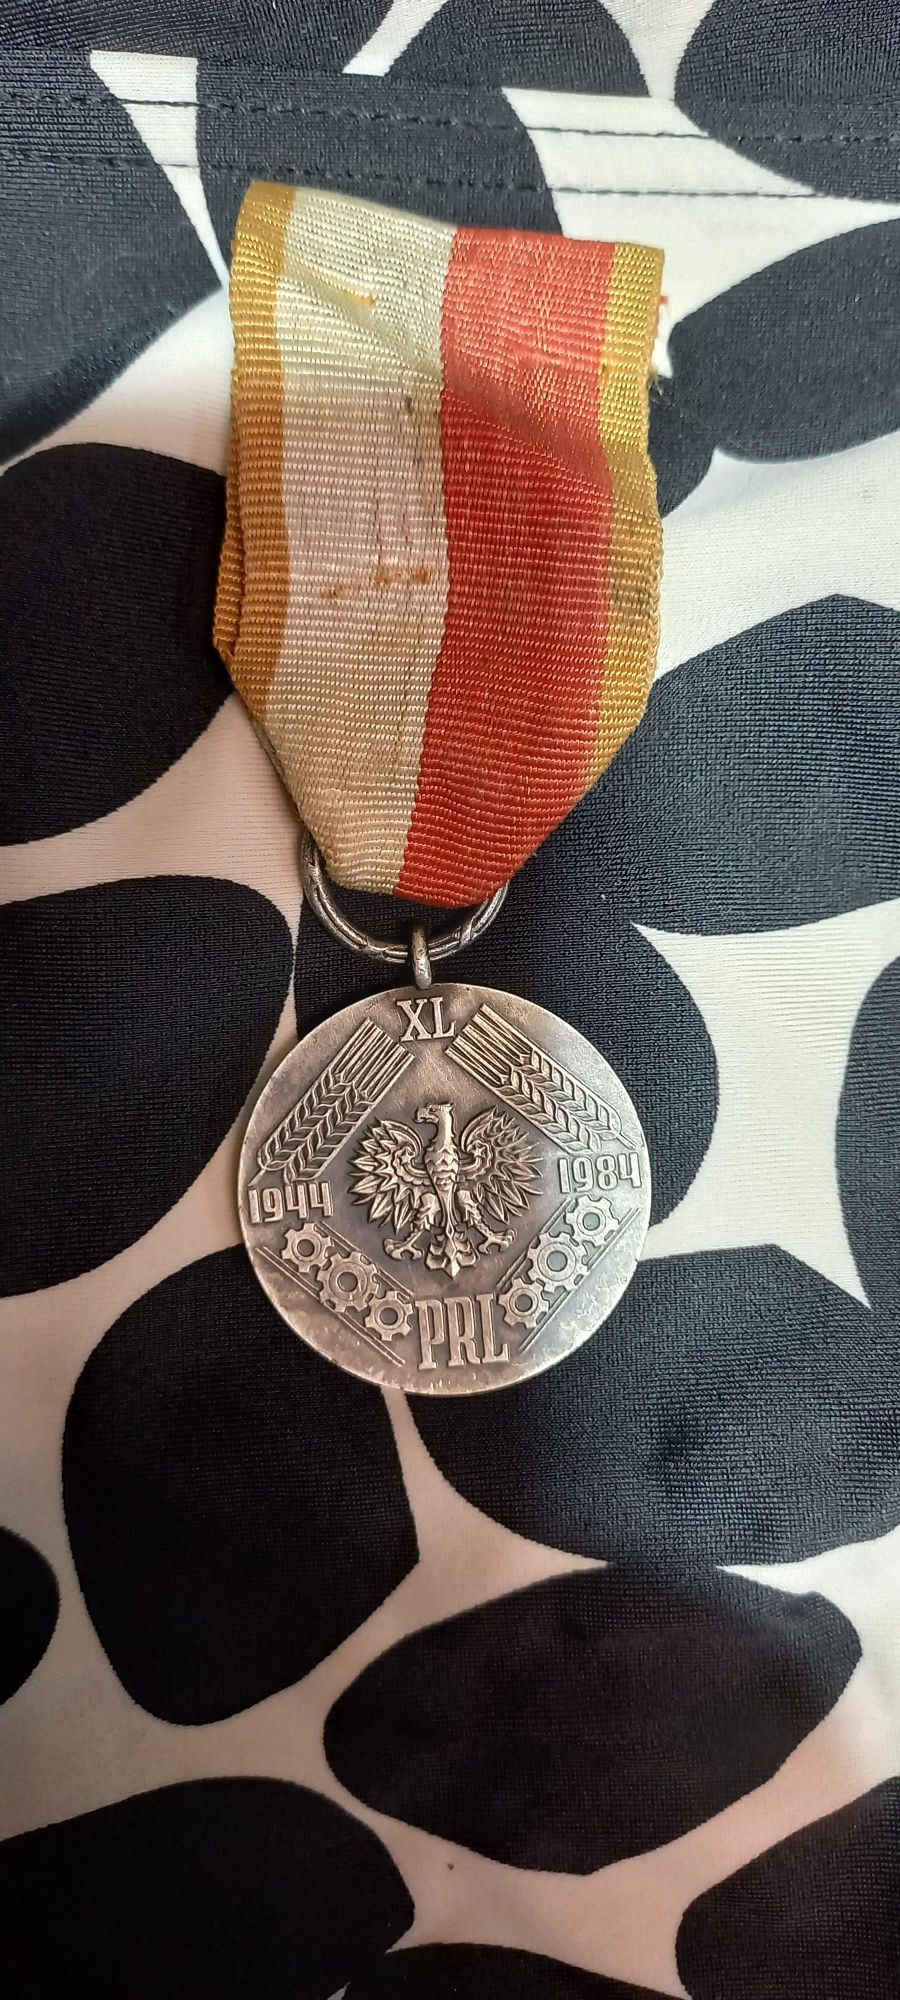 Kolekcja stary medal odznaka prl